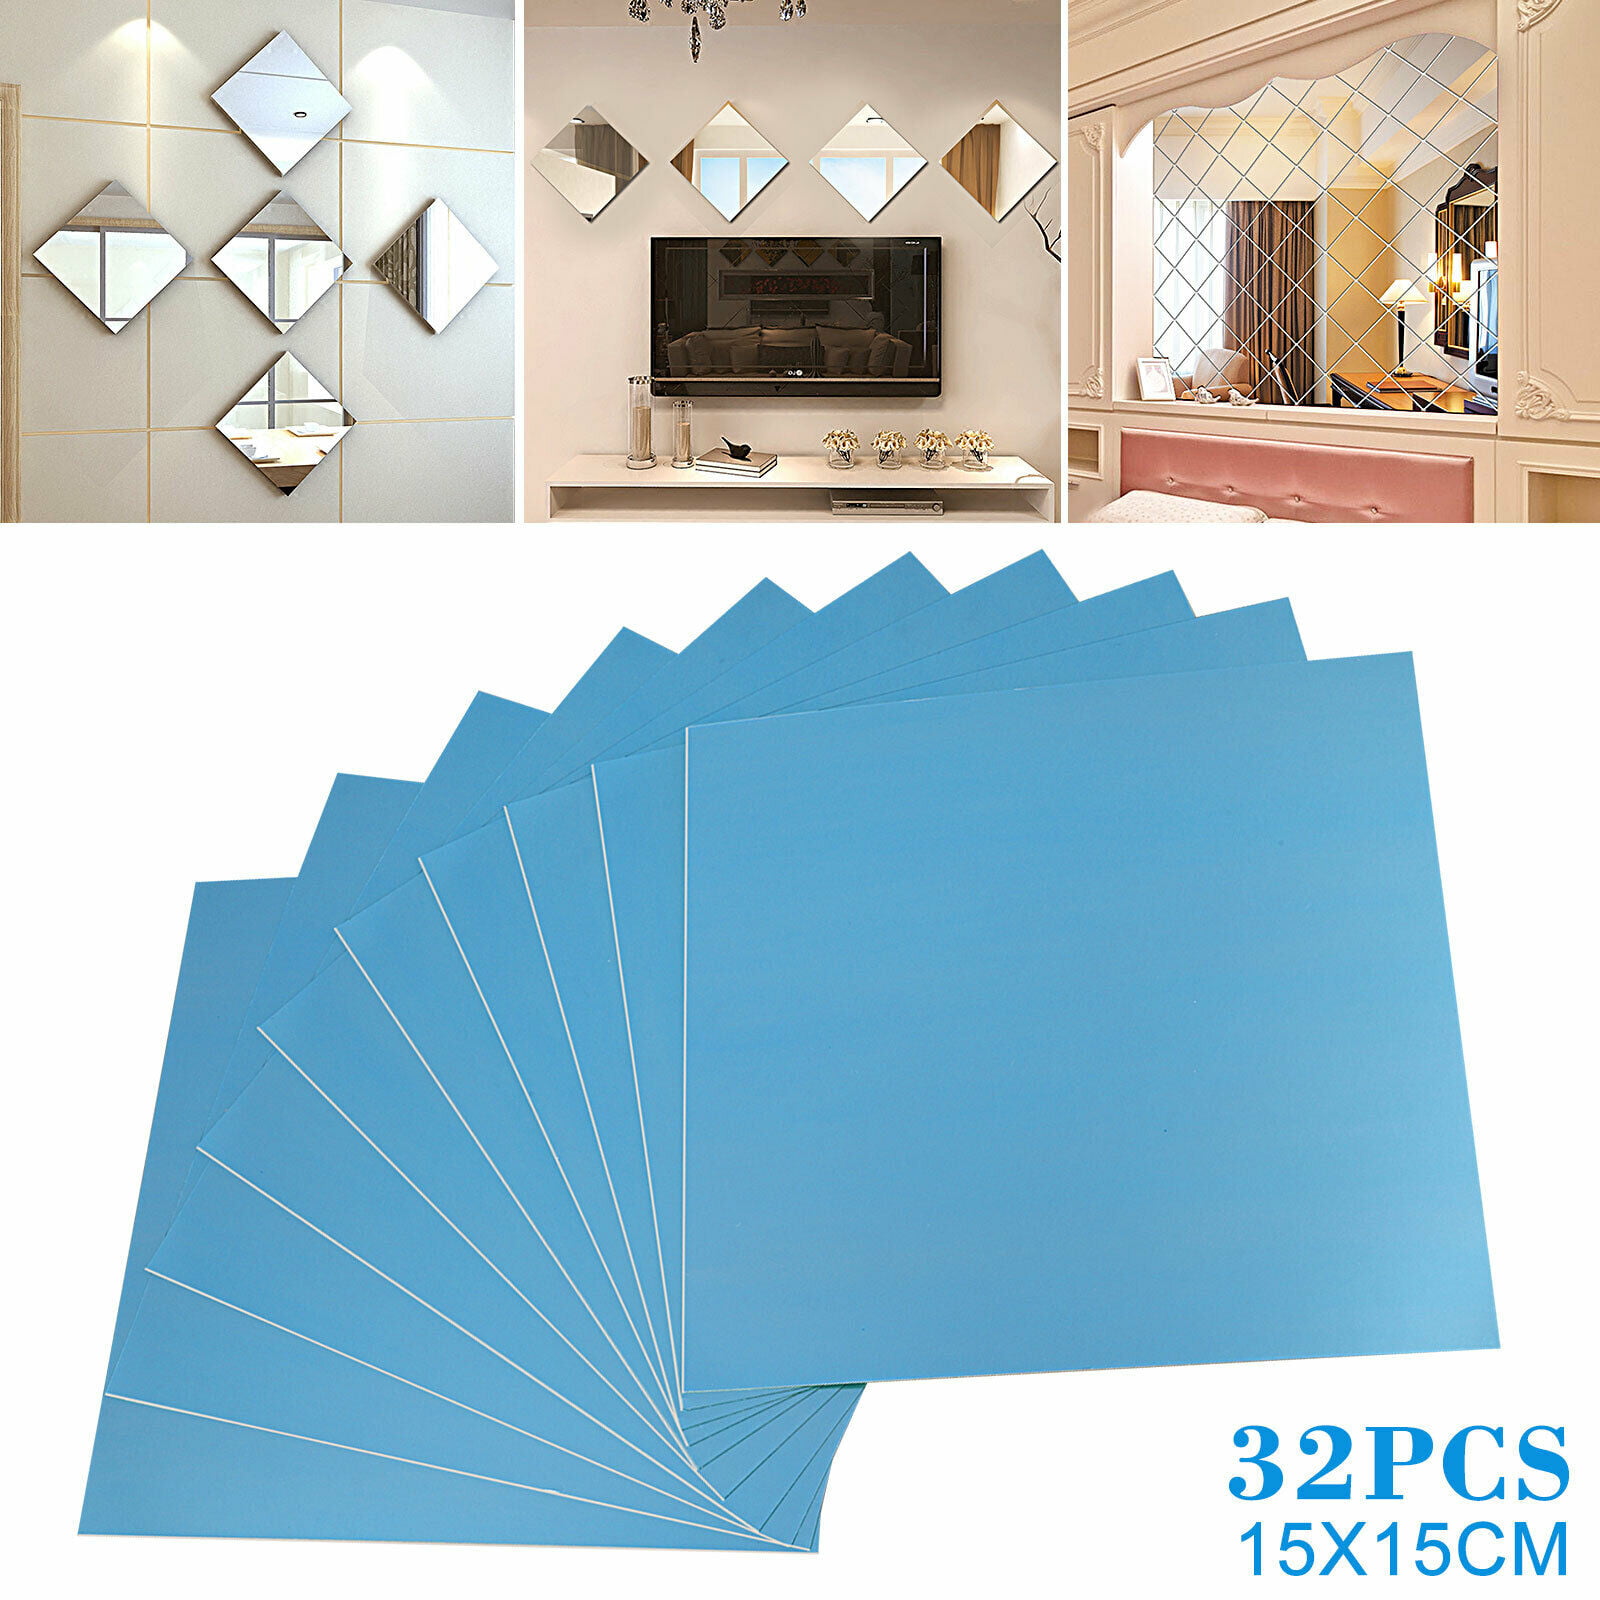 32PCS Square Wall Stickers Glass Mirror Tiles Self Adhesive Stick Home Art Decor 